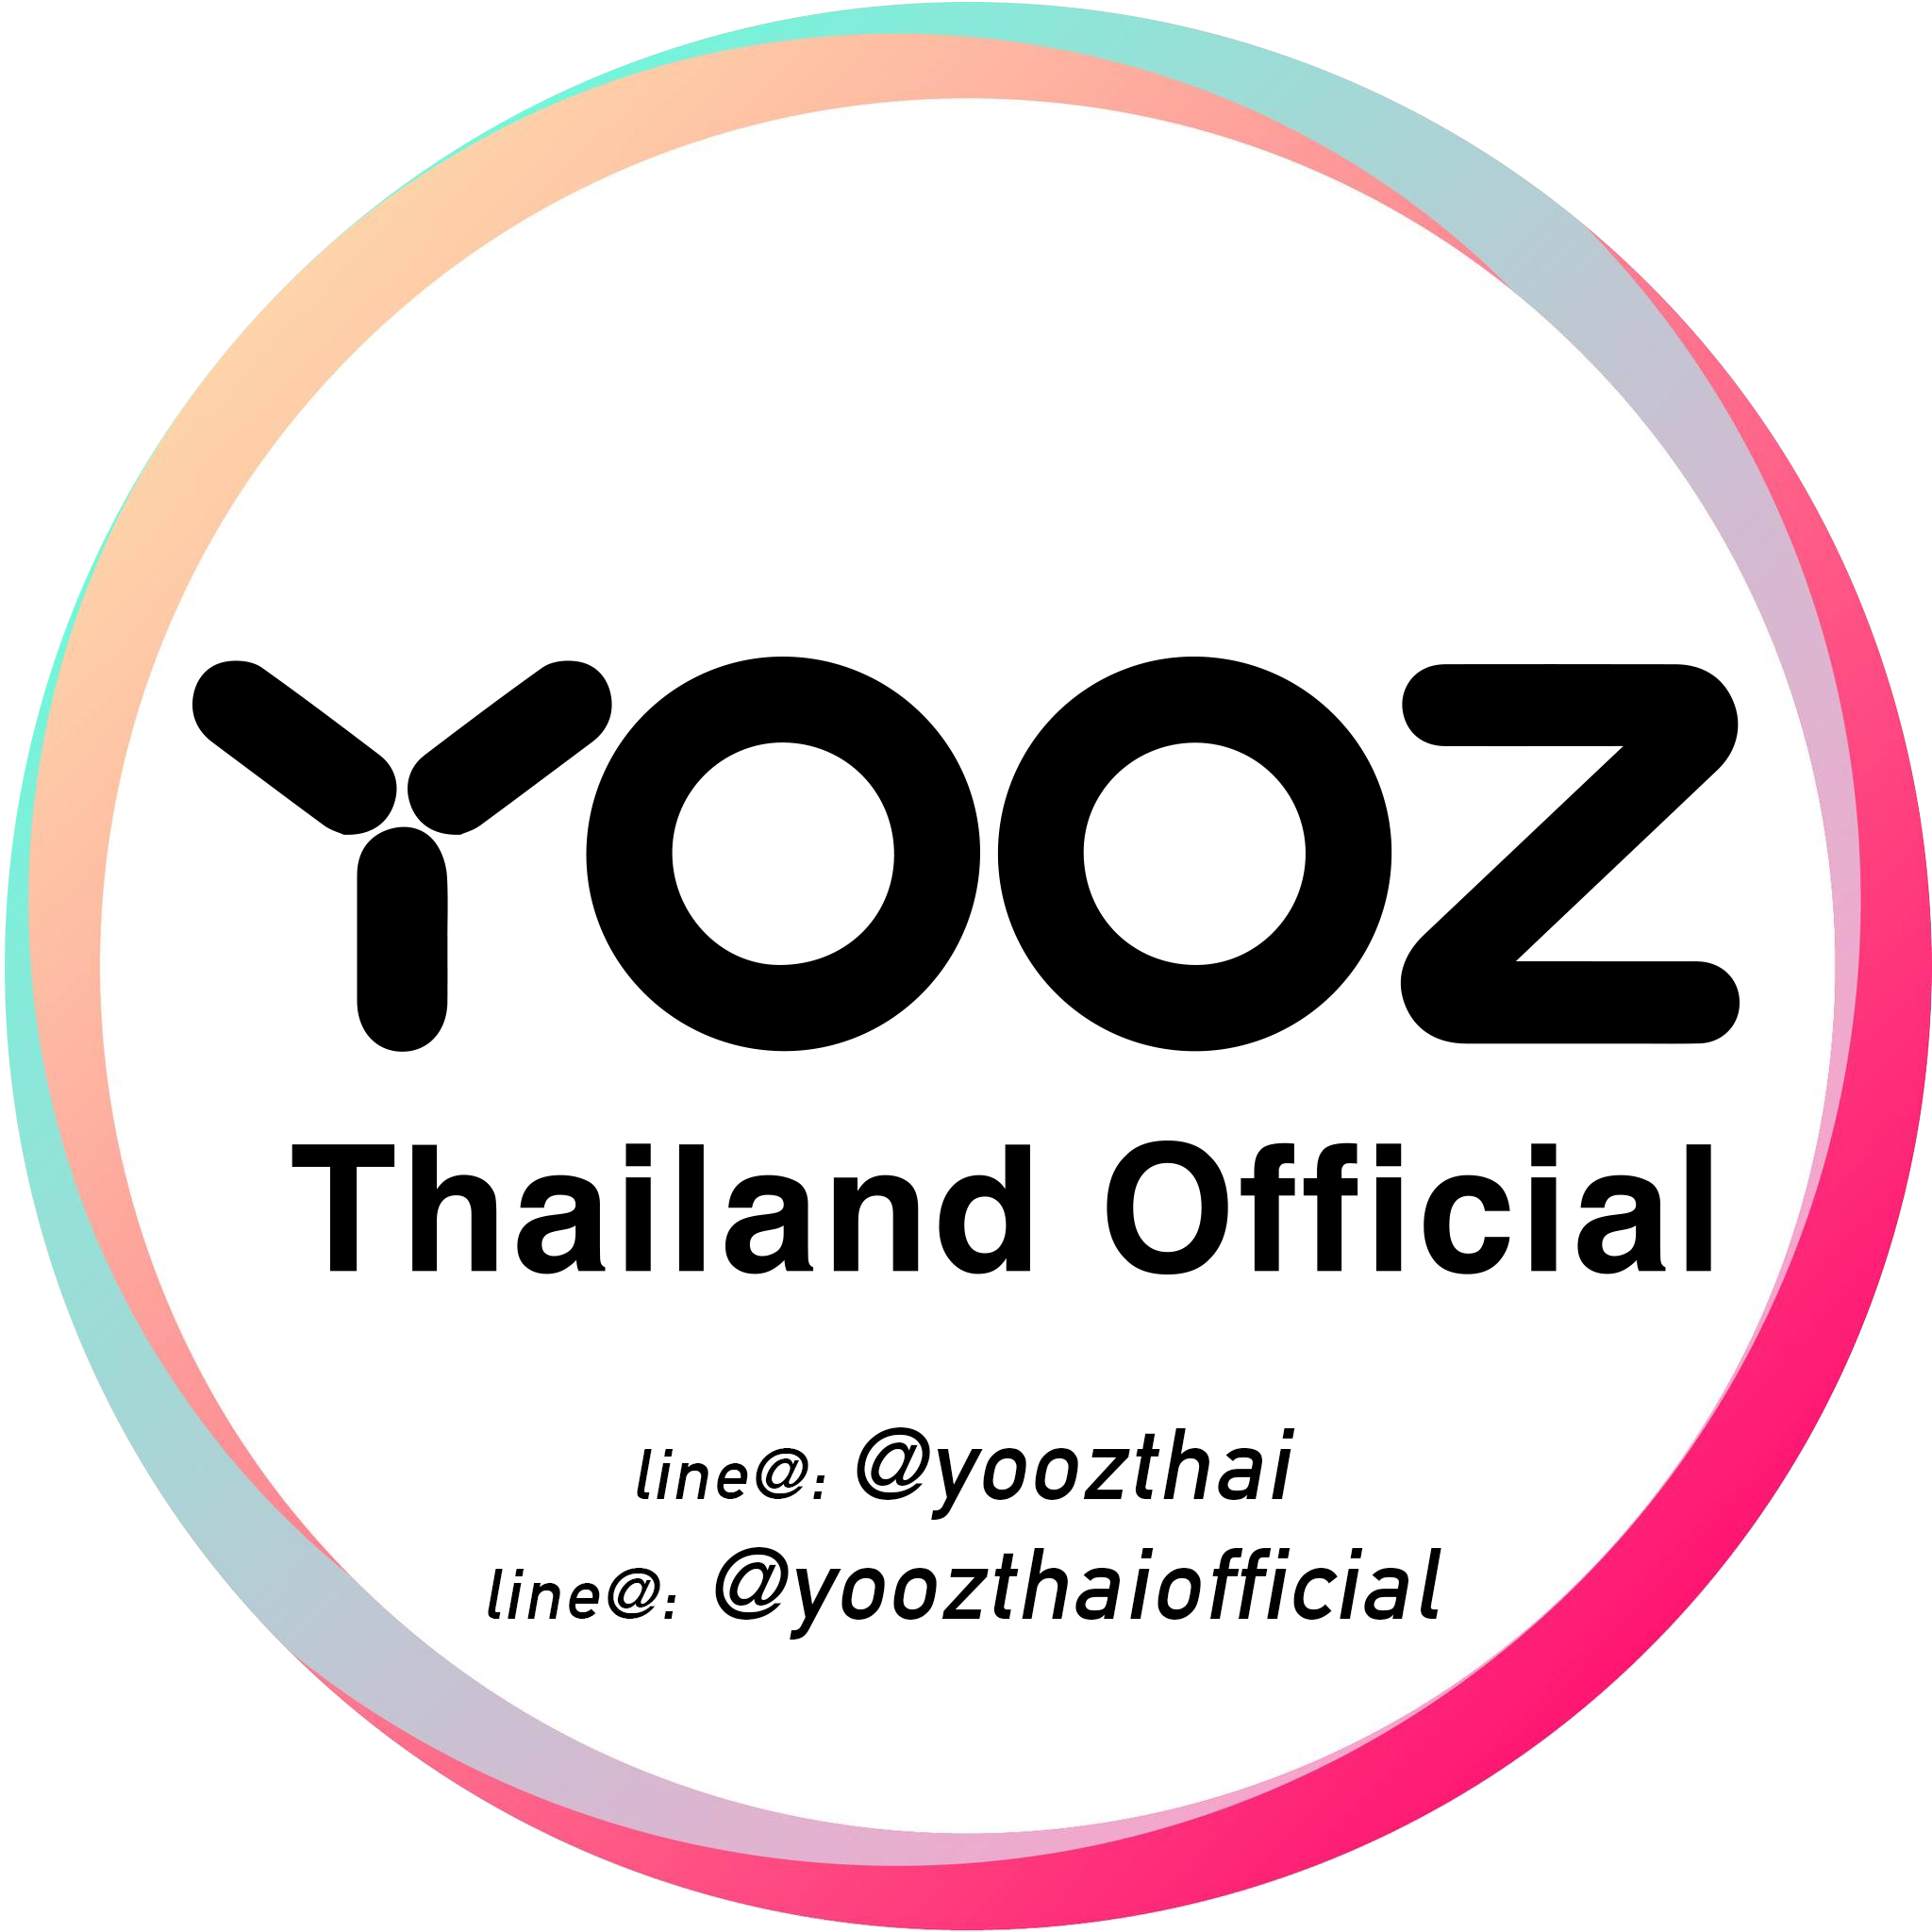 Yooz Thailand Official